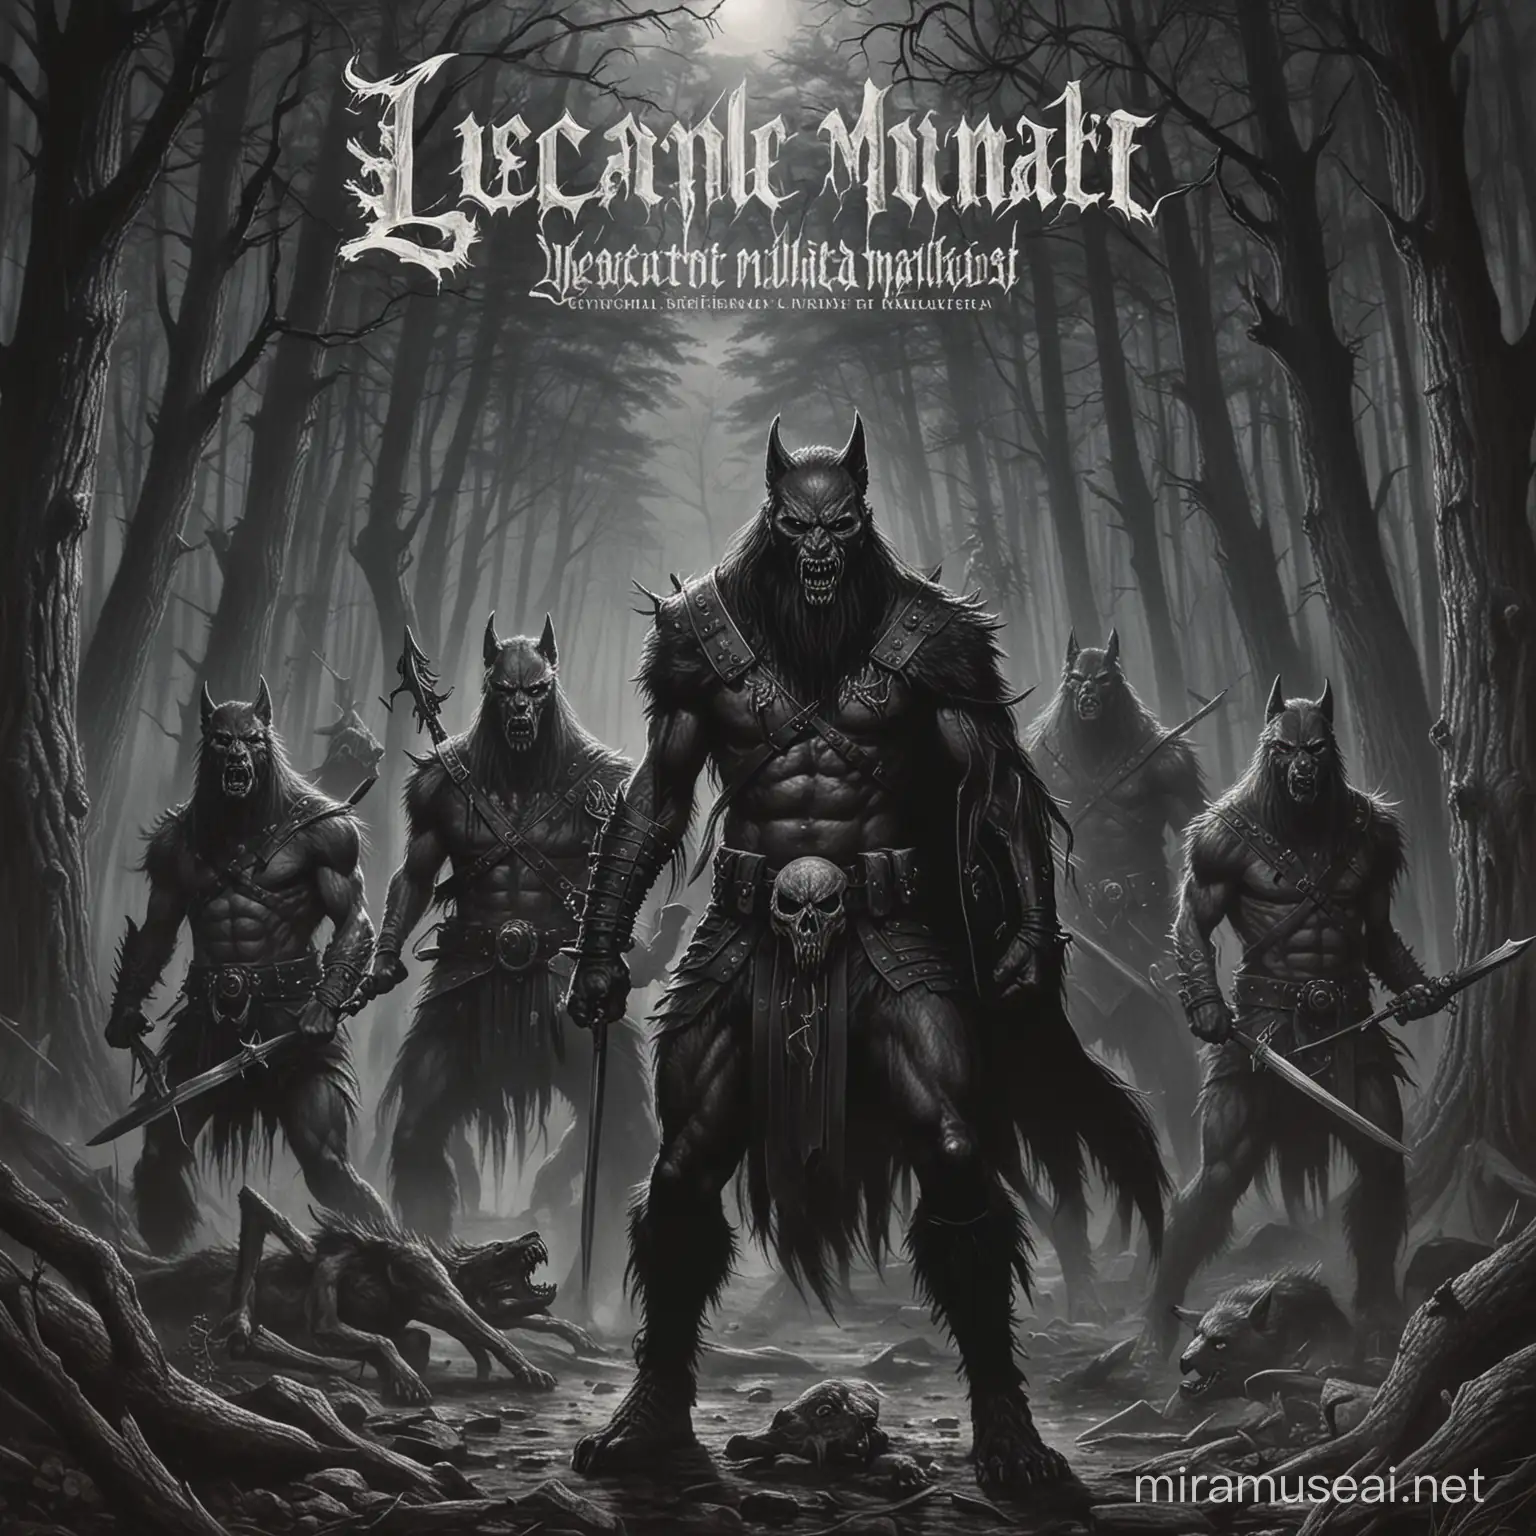 black metal album cover about Lycanthropic Militiarism